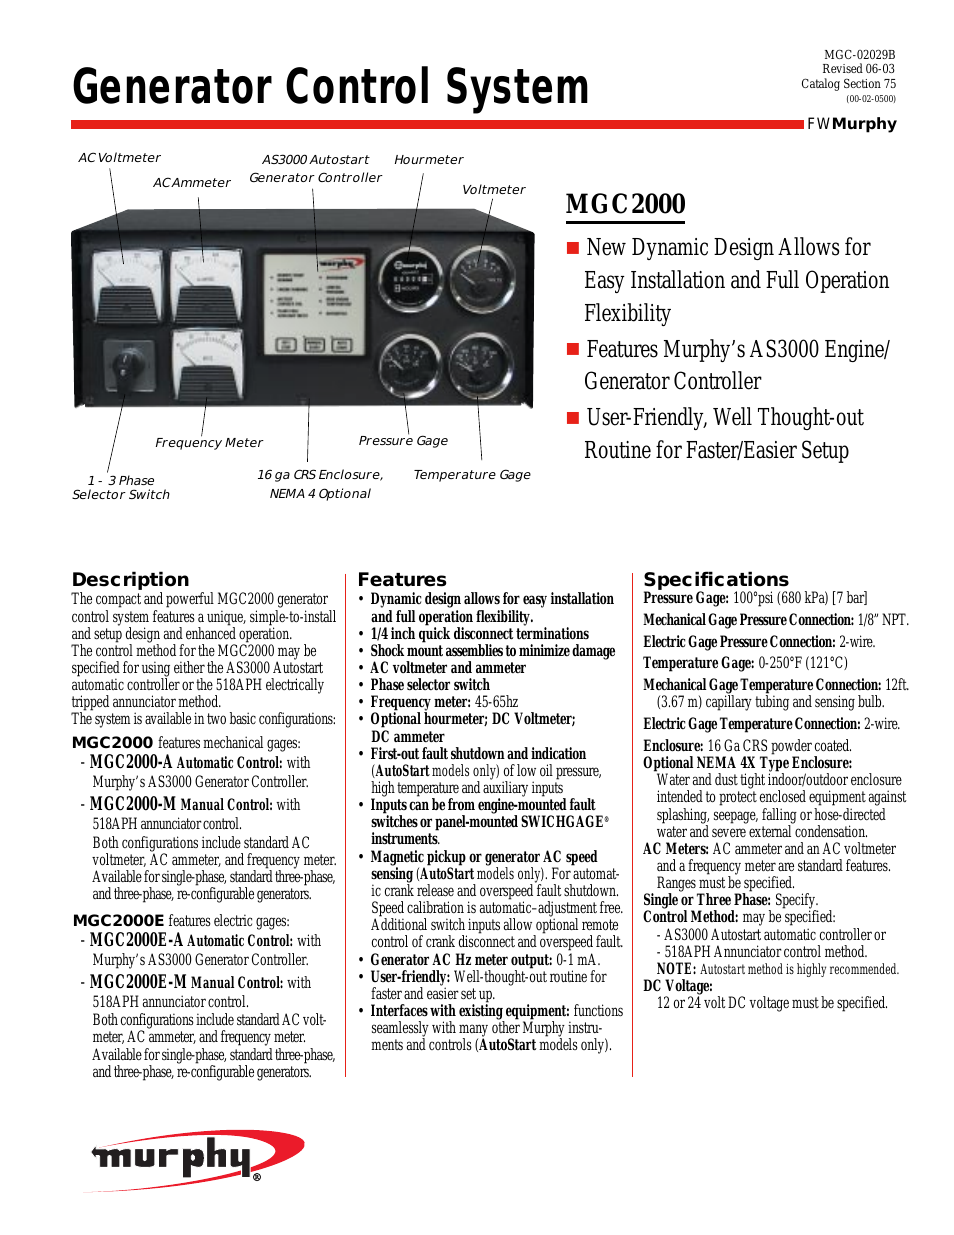 Generator Control System MGC2000